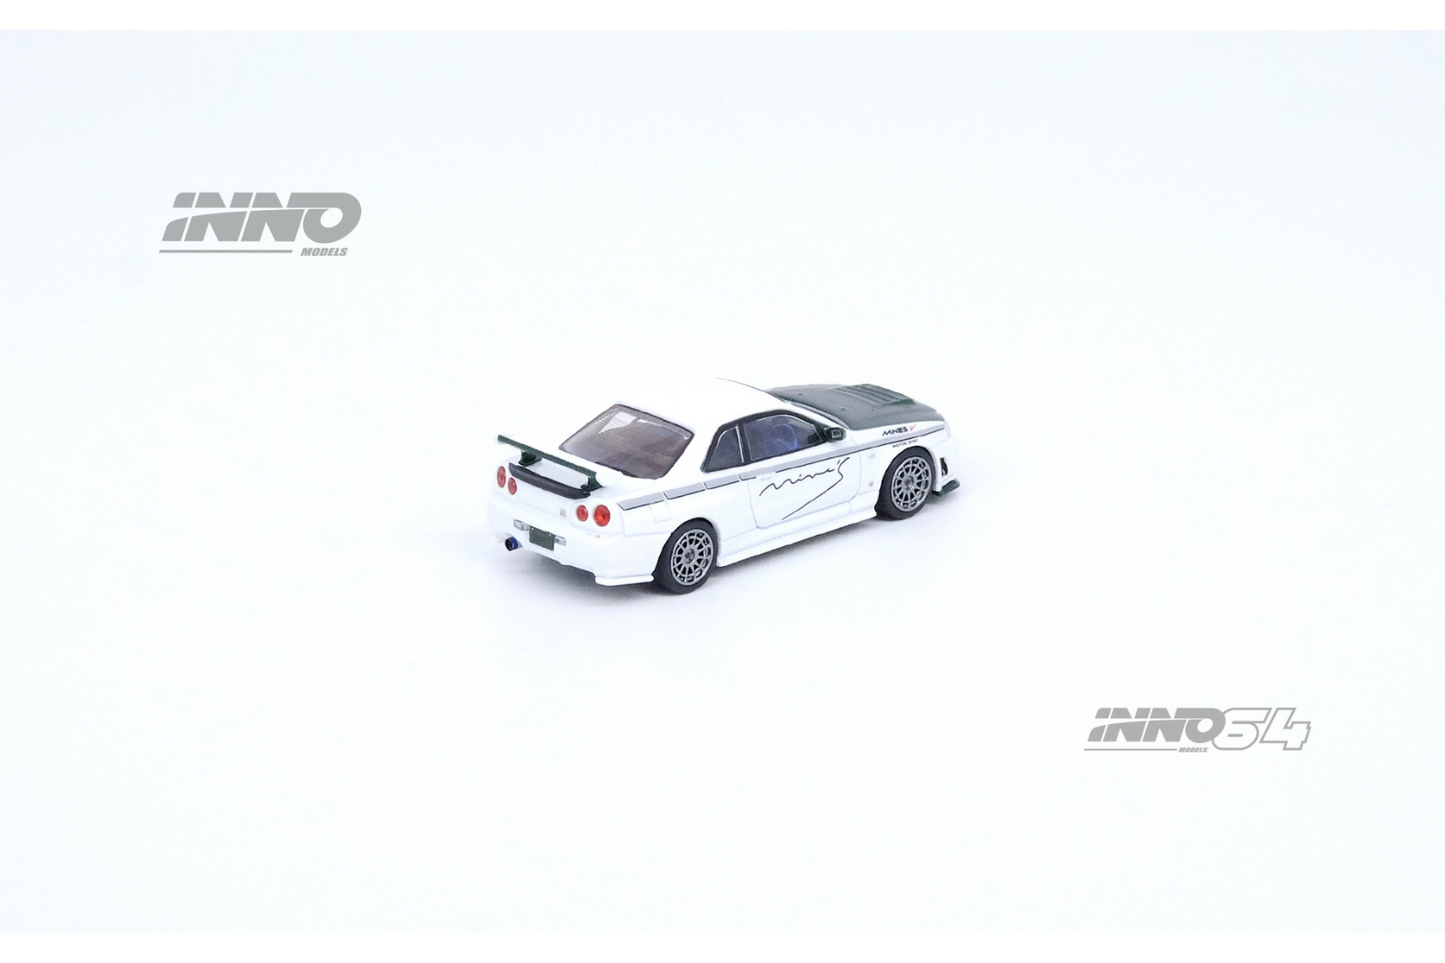 Inno64 Nissan Skyline GT-R (R34) Nismo R-Tune in White "Mine's"